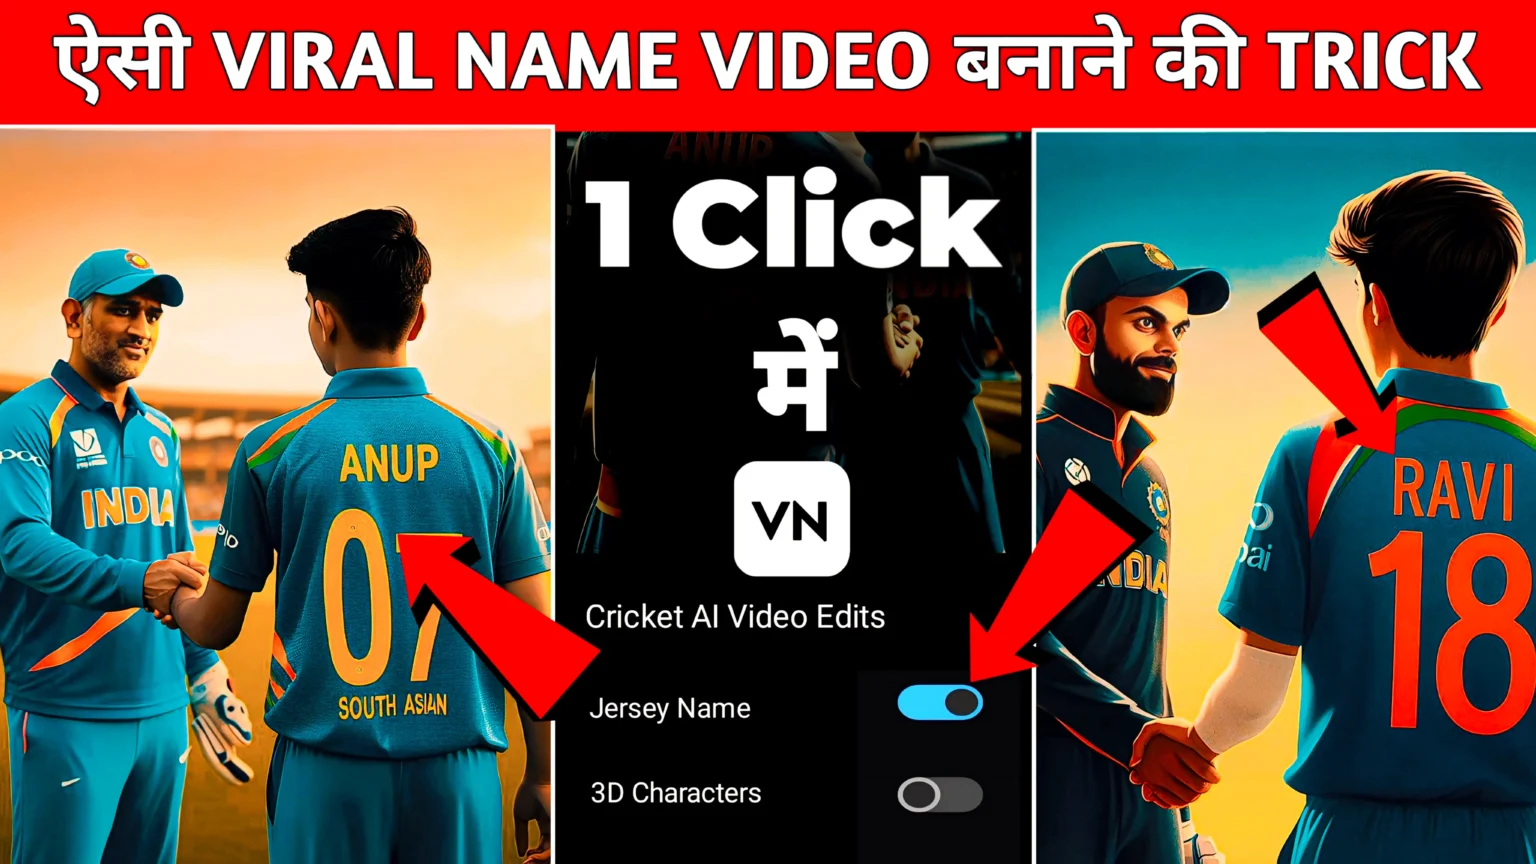 Bing AI Cricketer Handshake Jersey Name Image Generator | Create Your Image